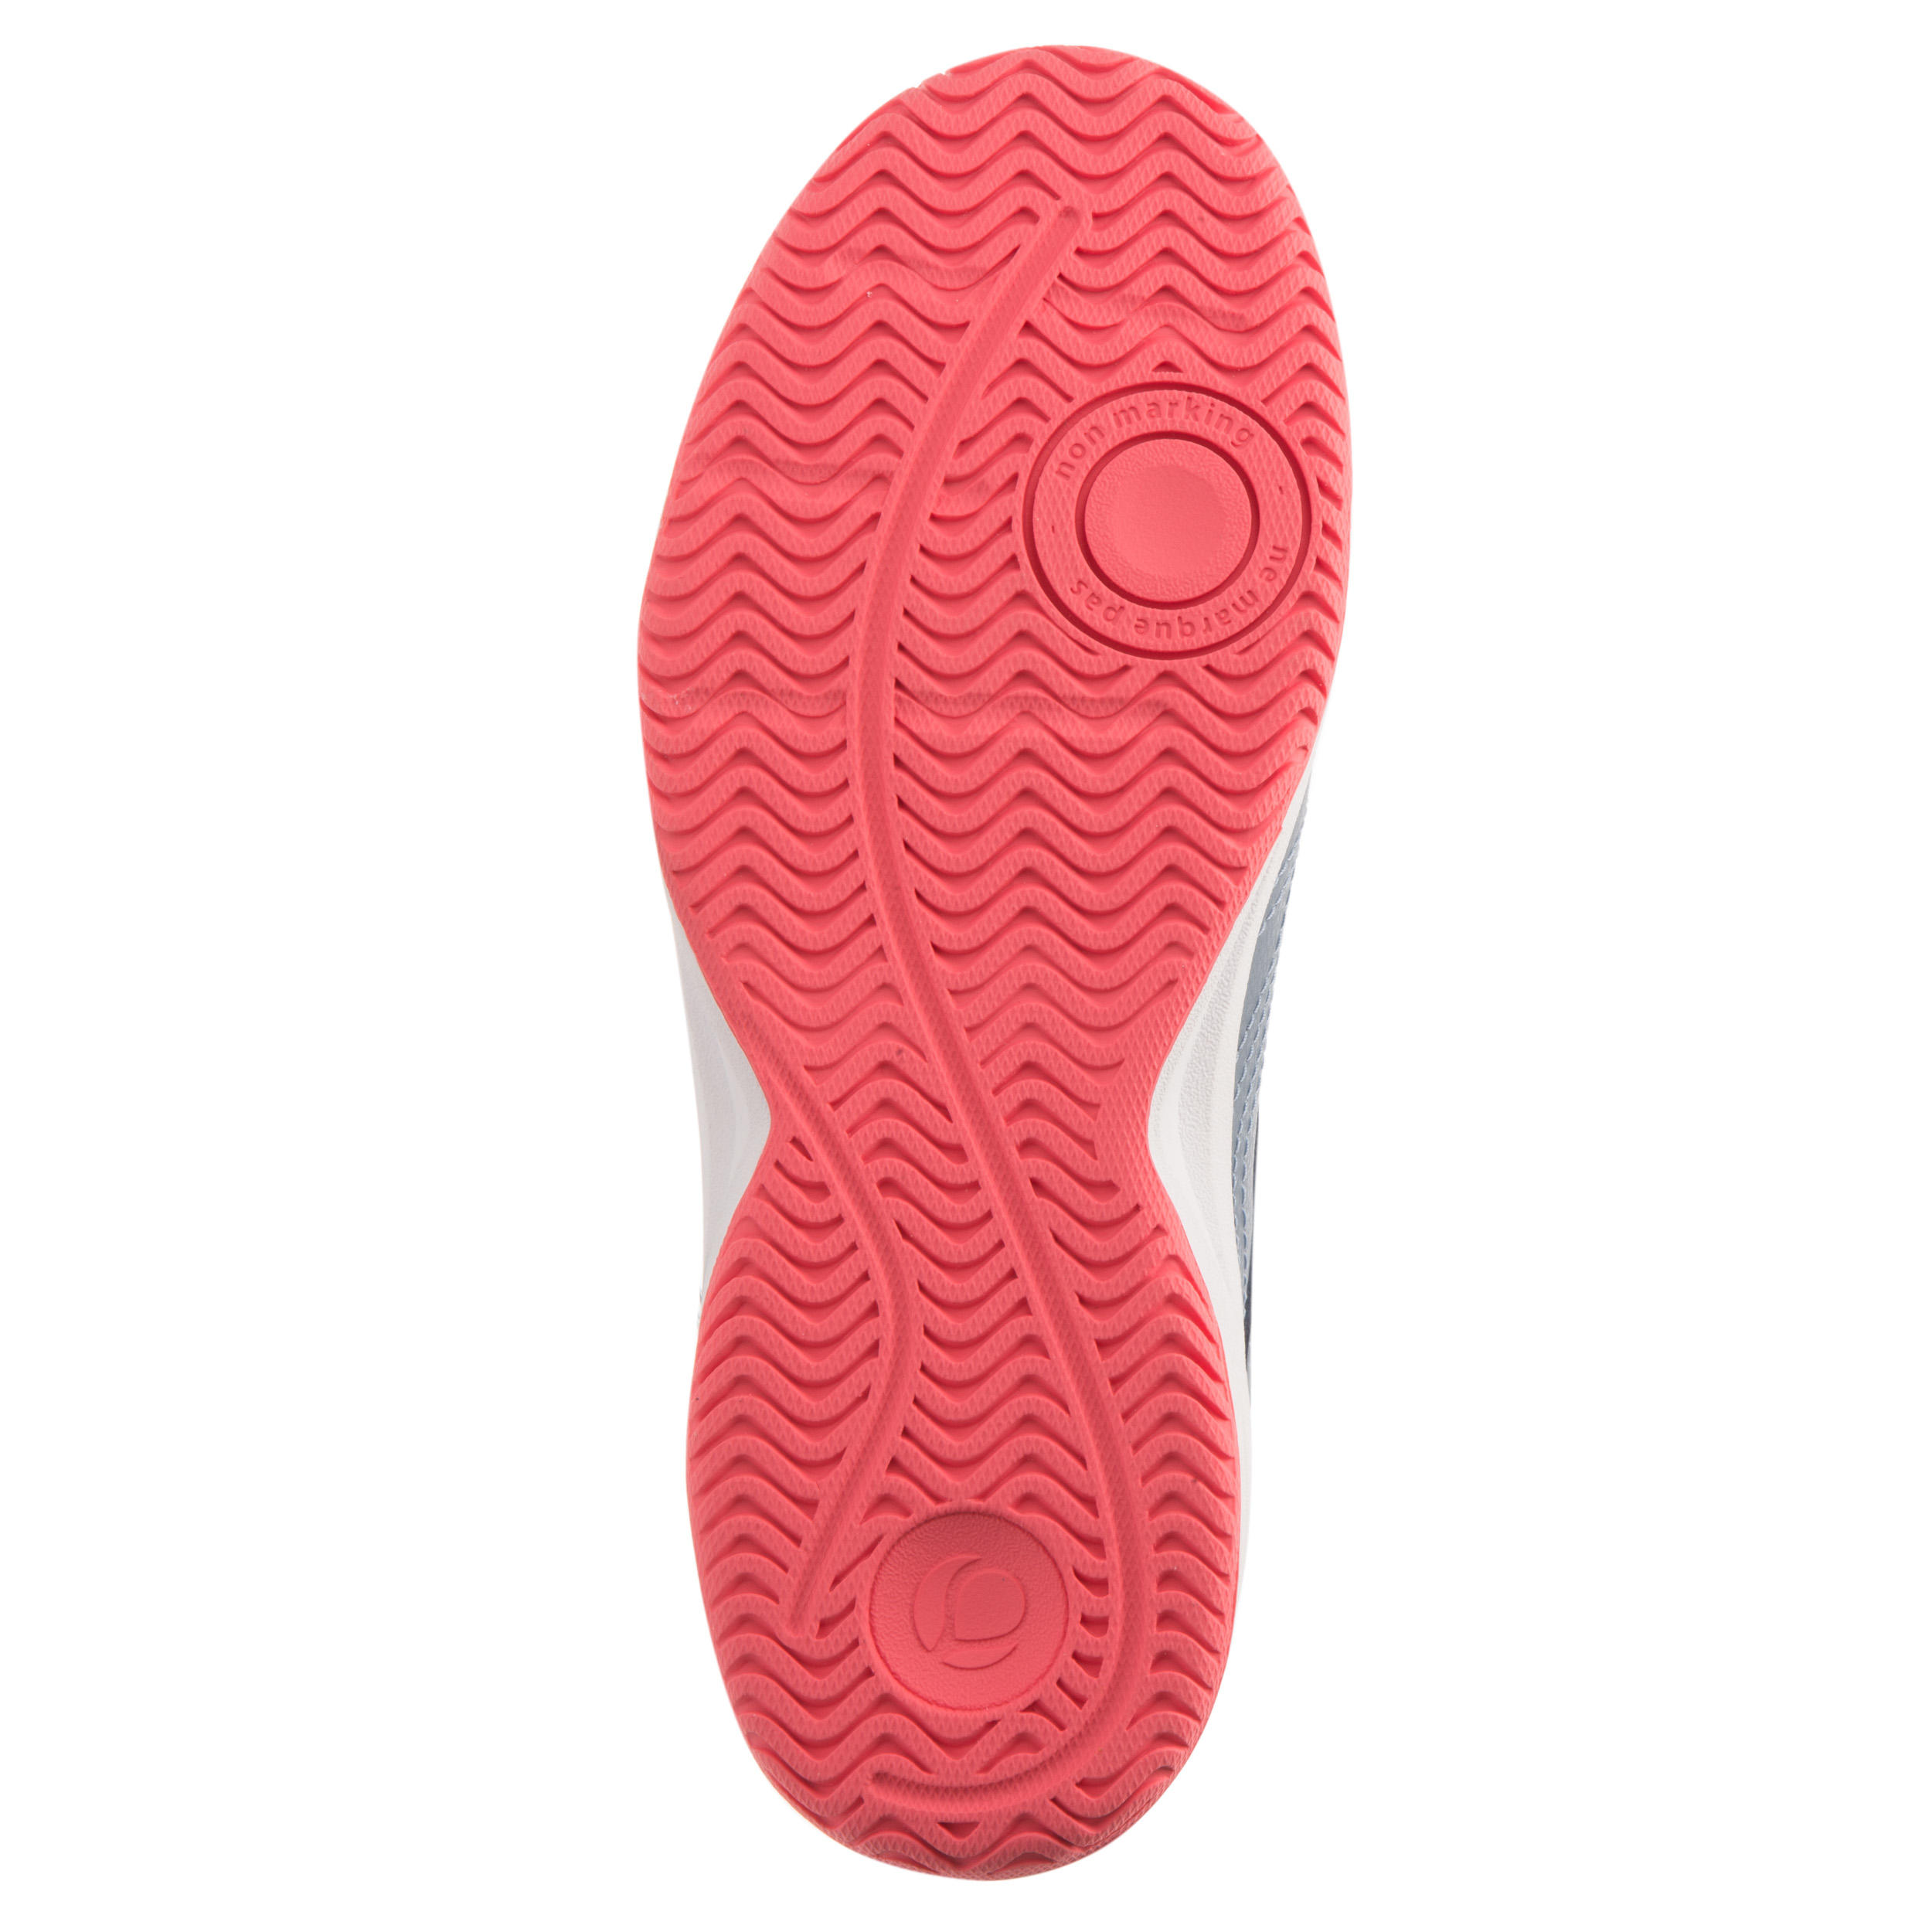 TS760 Kids' Tennis Shoes - Grey/Pink 9/10